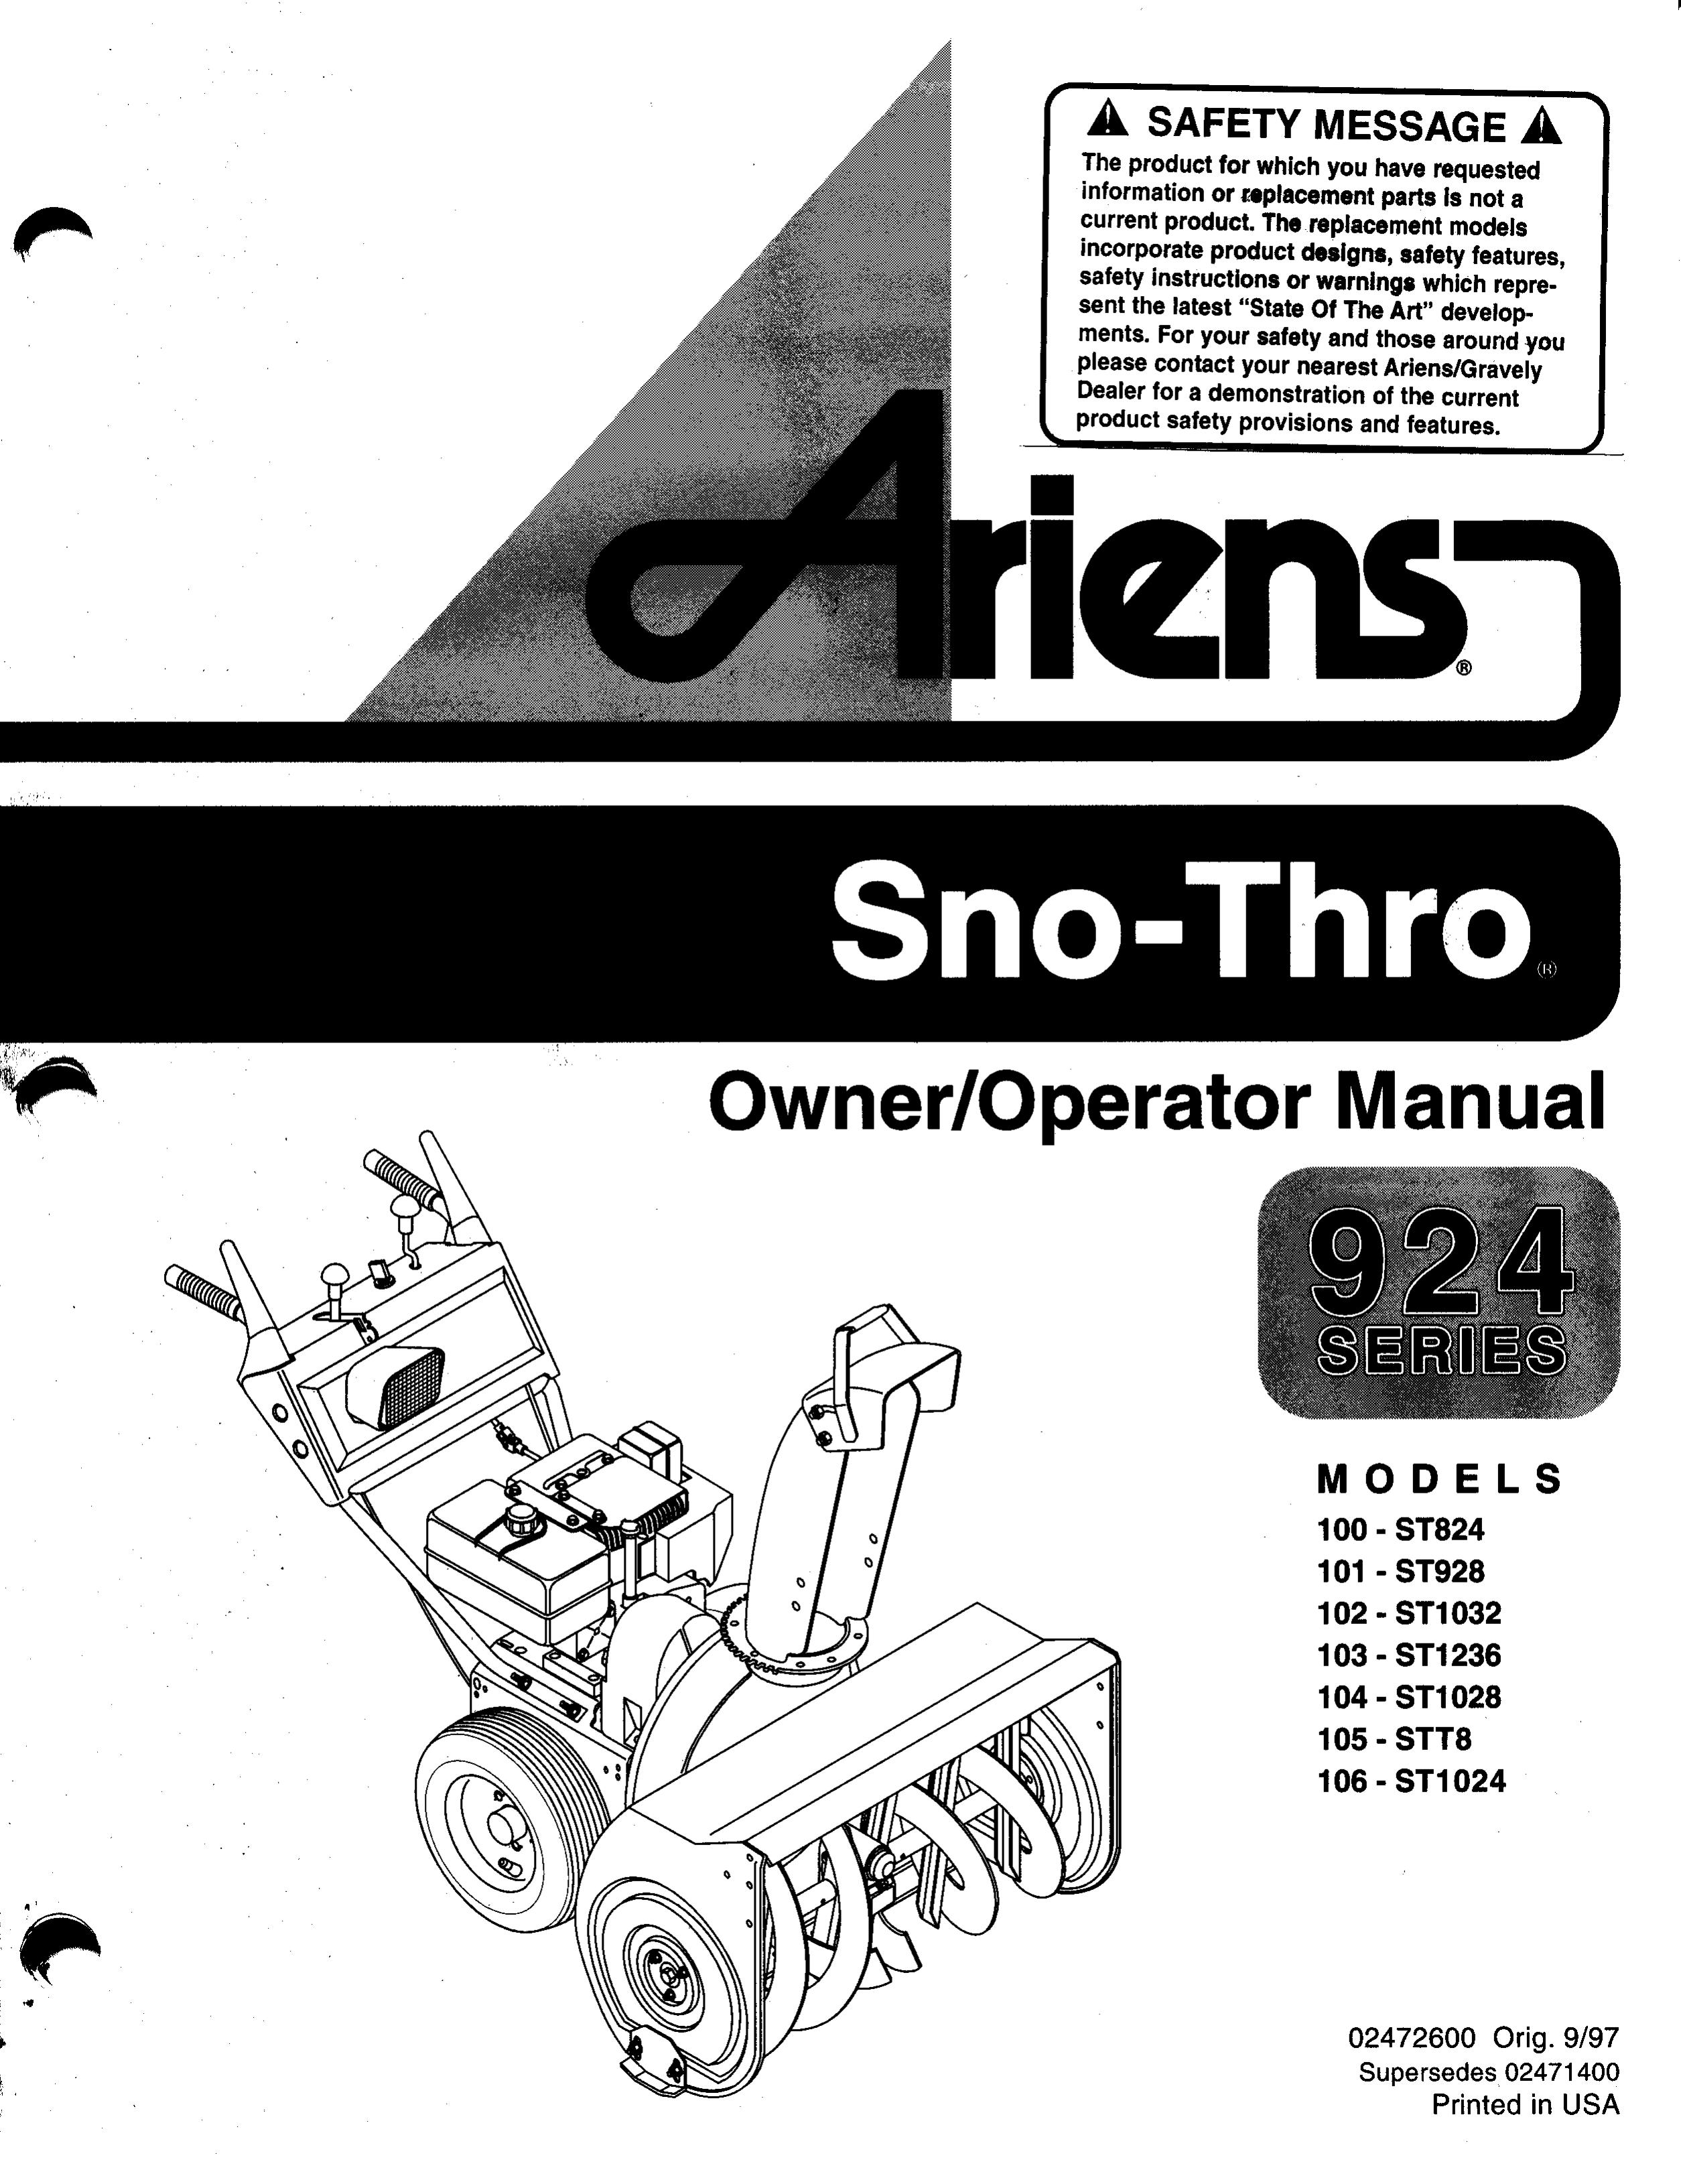 Ariens 102-ST1032 Snow Blower User Manual